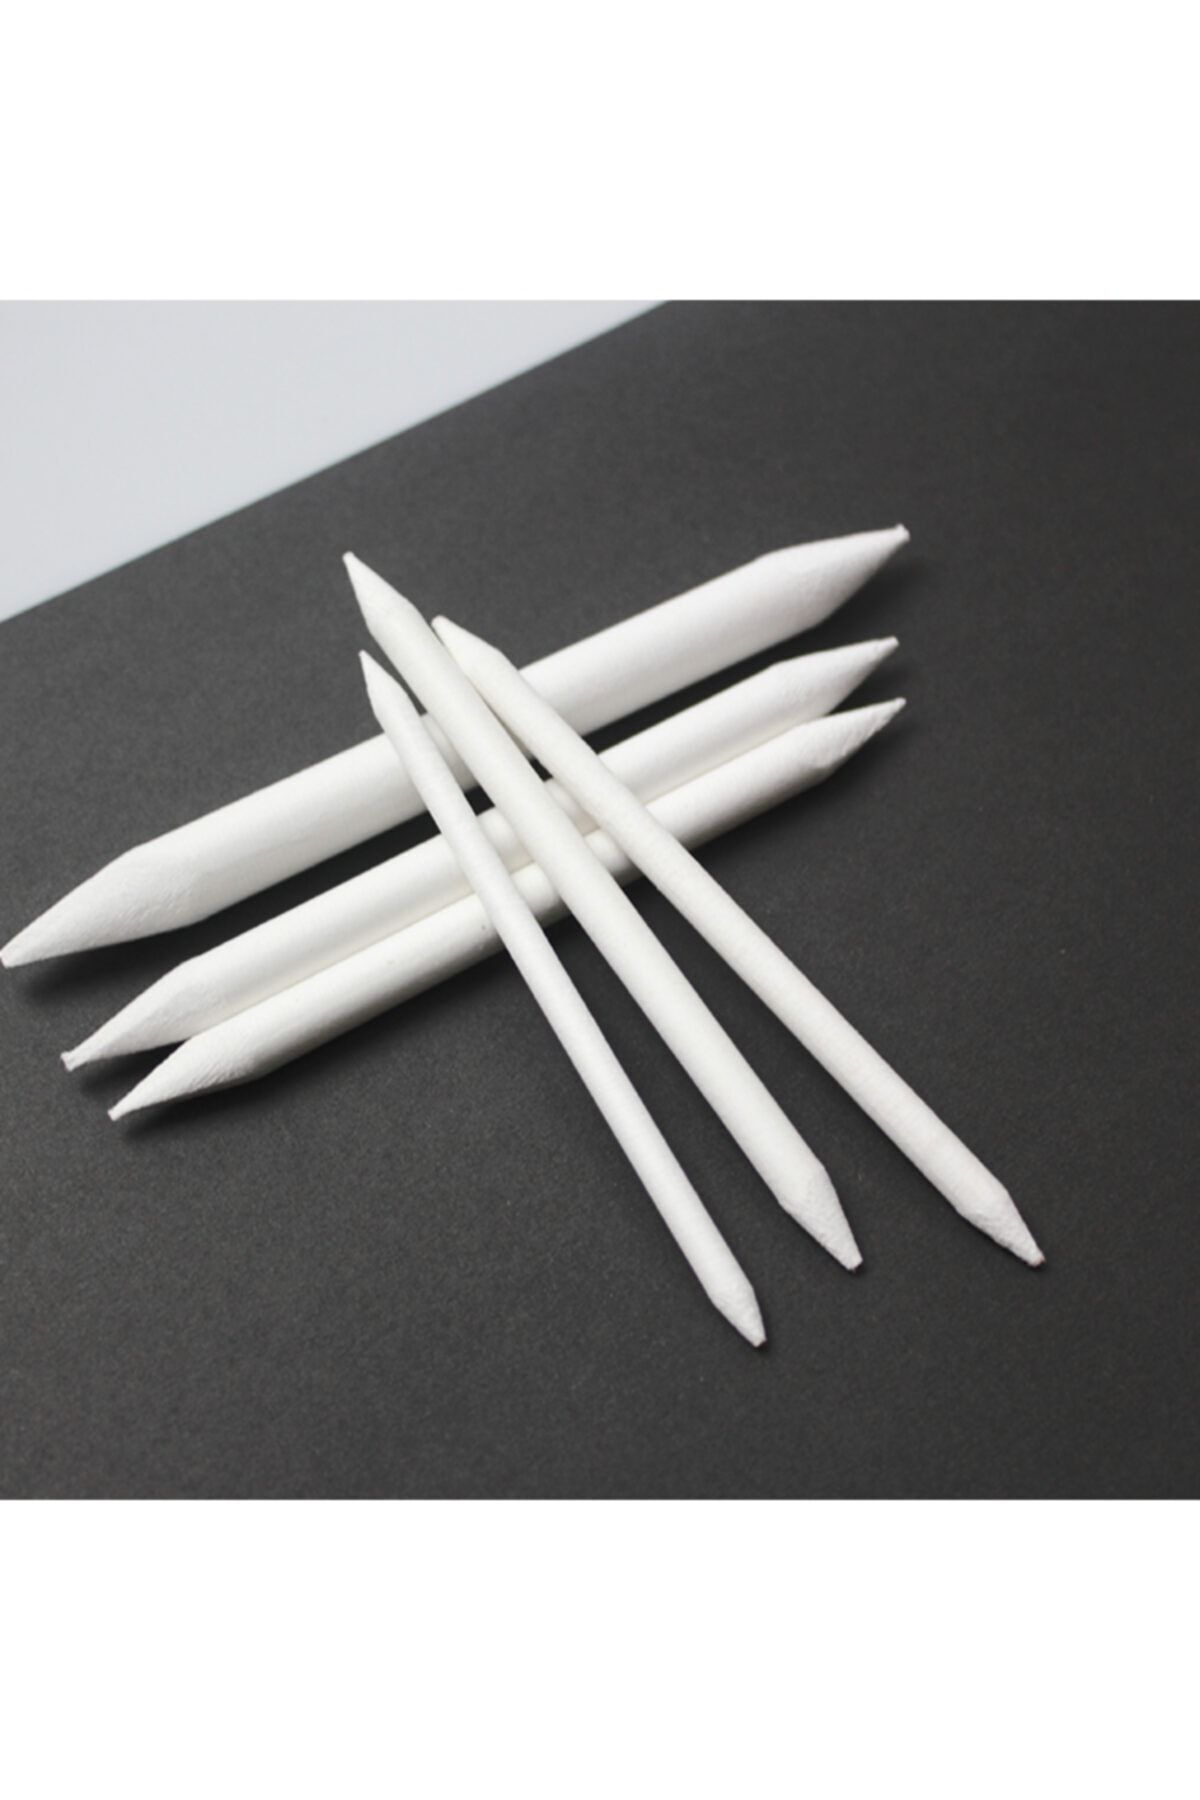 Vox Art 6'lı Eskiz Blender Kalemi Mini Uzun Kalite (es-02u)